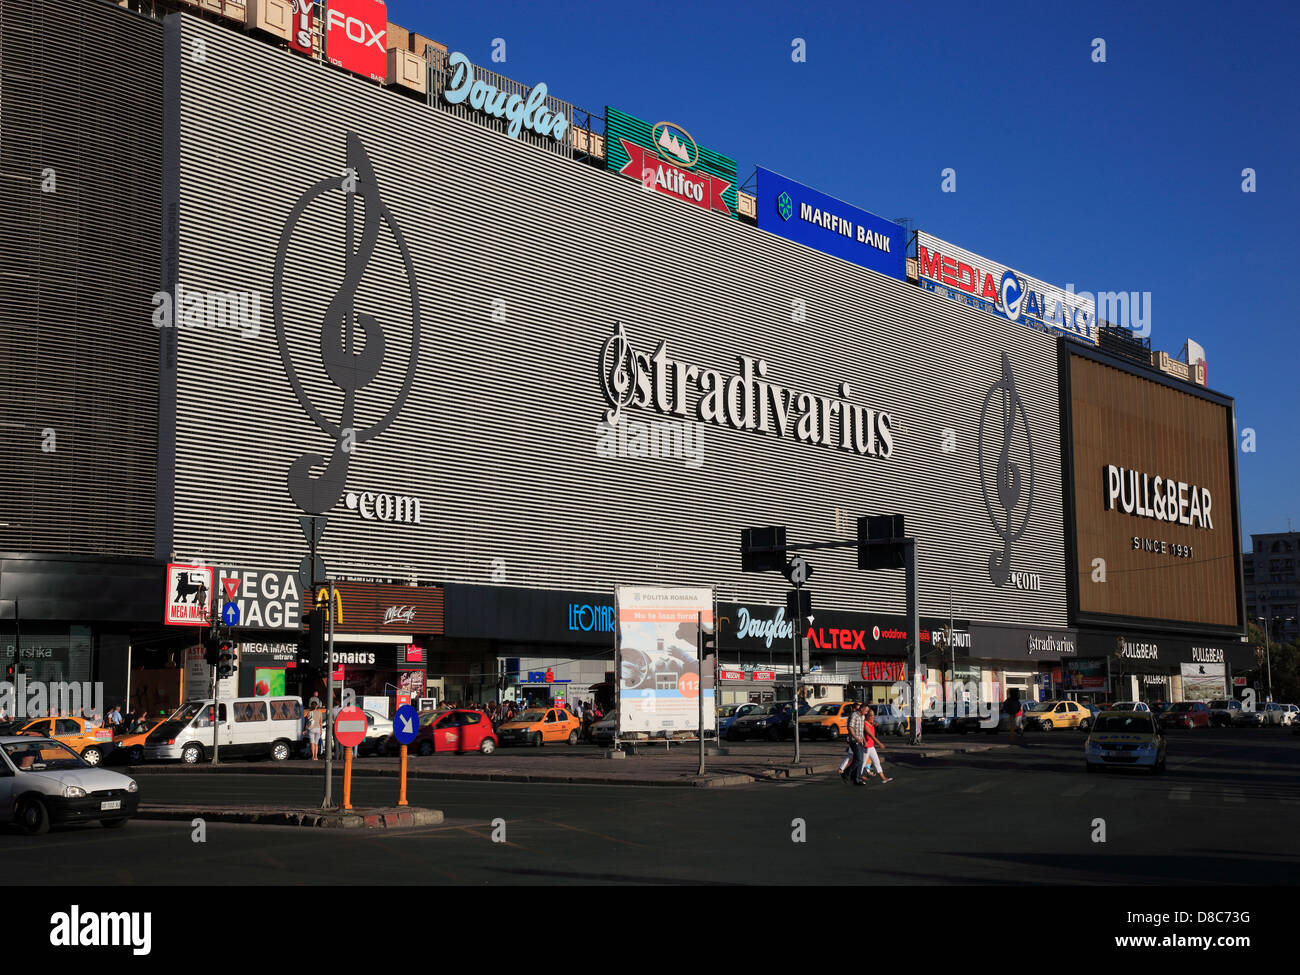 Bershka Shopping Center, Bucharest, Romania Stock Photo - Alamy